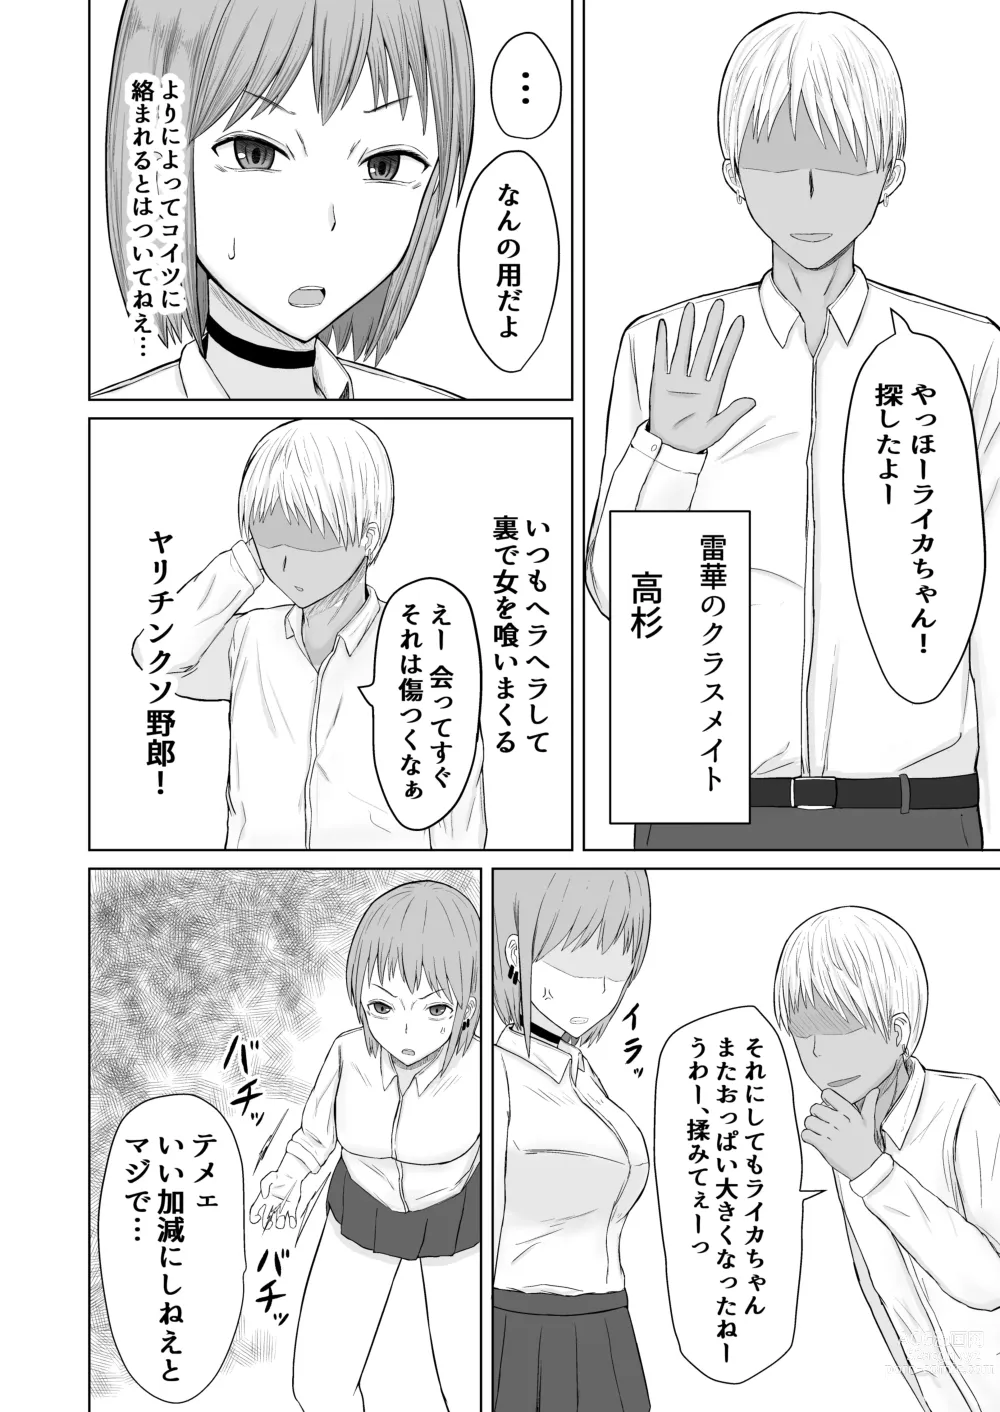 Page 8 of doujinshi Chounouryoku Shoujo  Laika-chan VS Yarichin  Kusoyaro